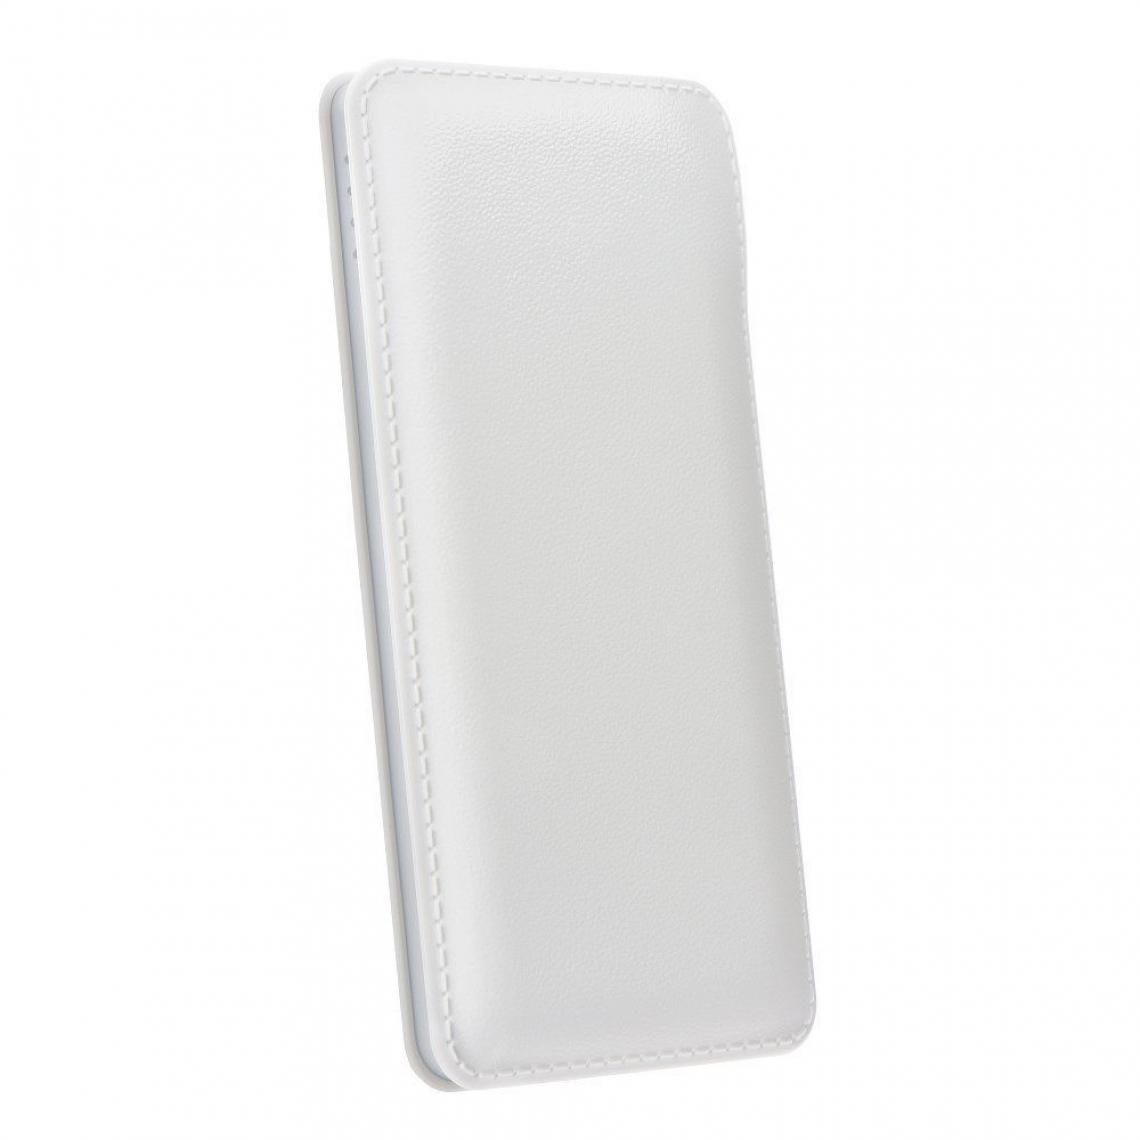 Ozzzo - Chargeur batterie externe 30000 mAh powerbank ozzzo blanc pour SAMSUNG N950 Galaxy Note 8 - Autres accessoires smartphone